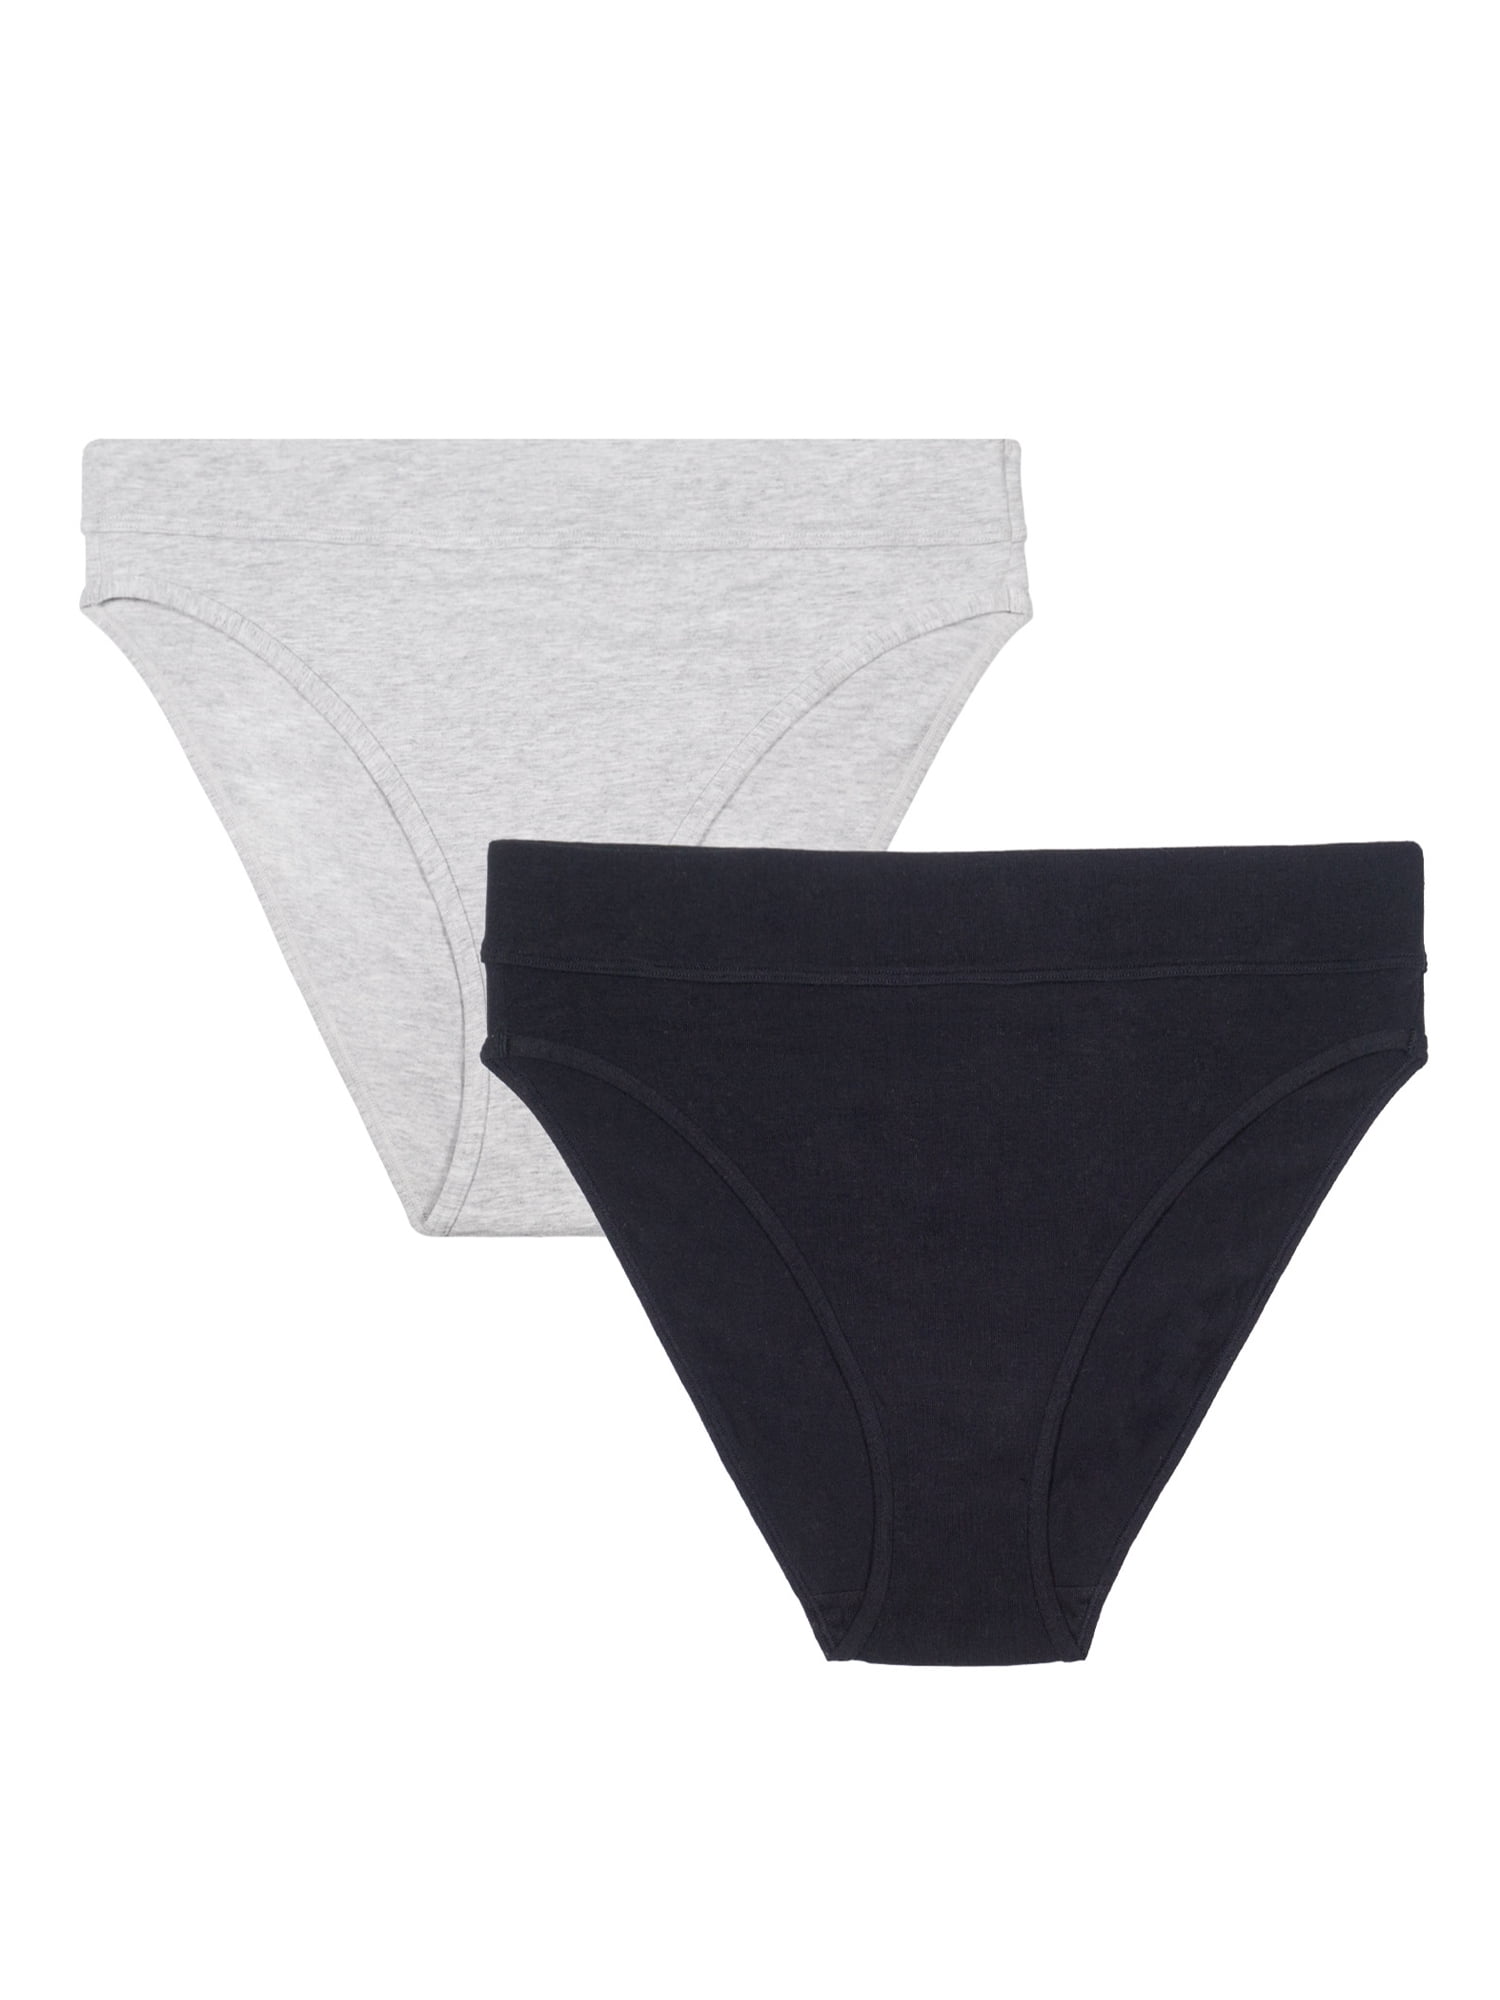 7pcs Simple Solid Briefs, Comfy Low Waist Everyday Intimates Panties,  Women's Lingerie & Underwear